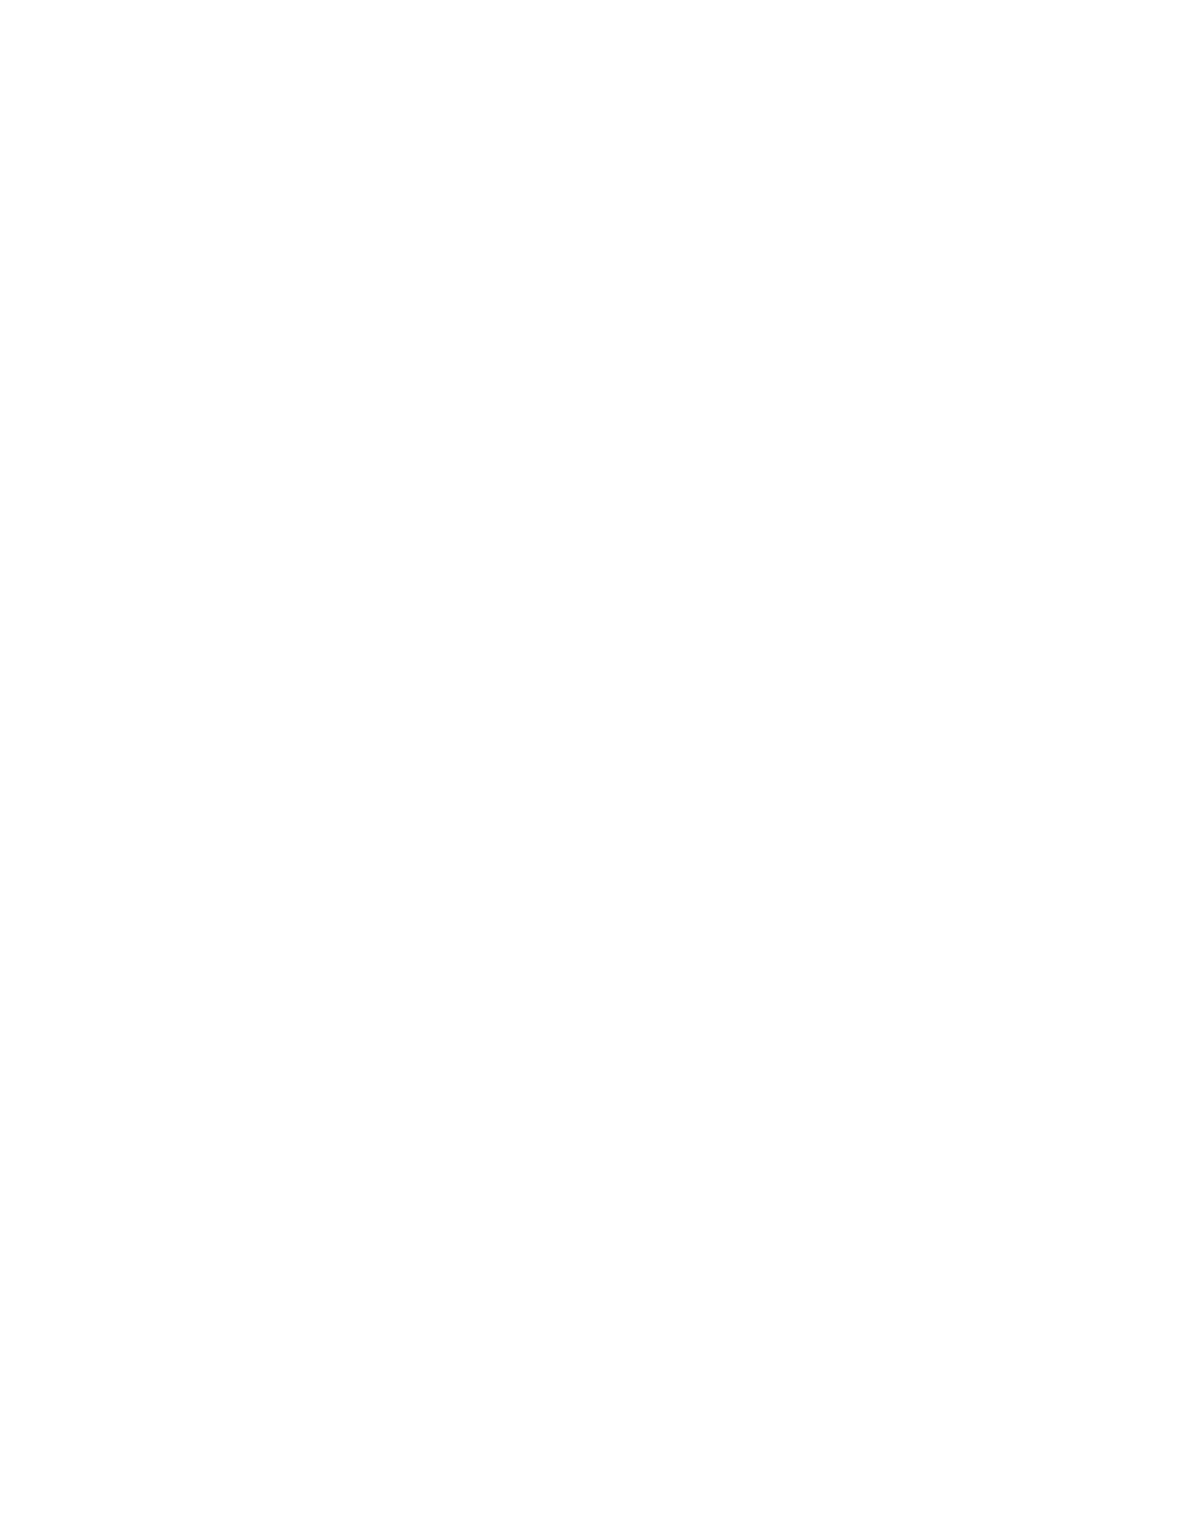 CI&T logo for dark backgrounds (transparent PNG)